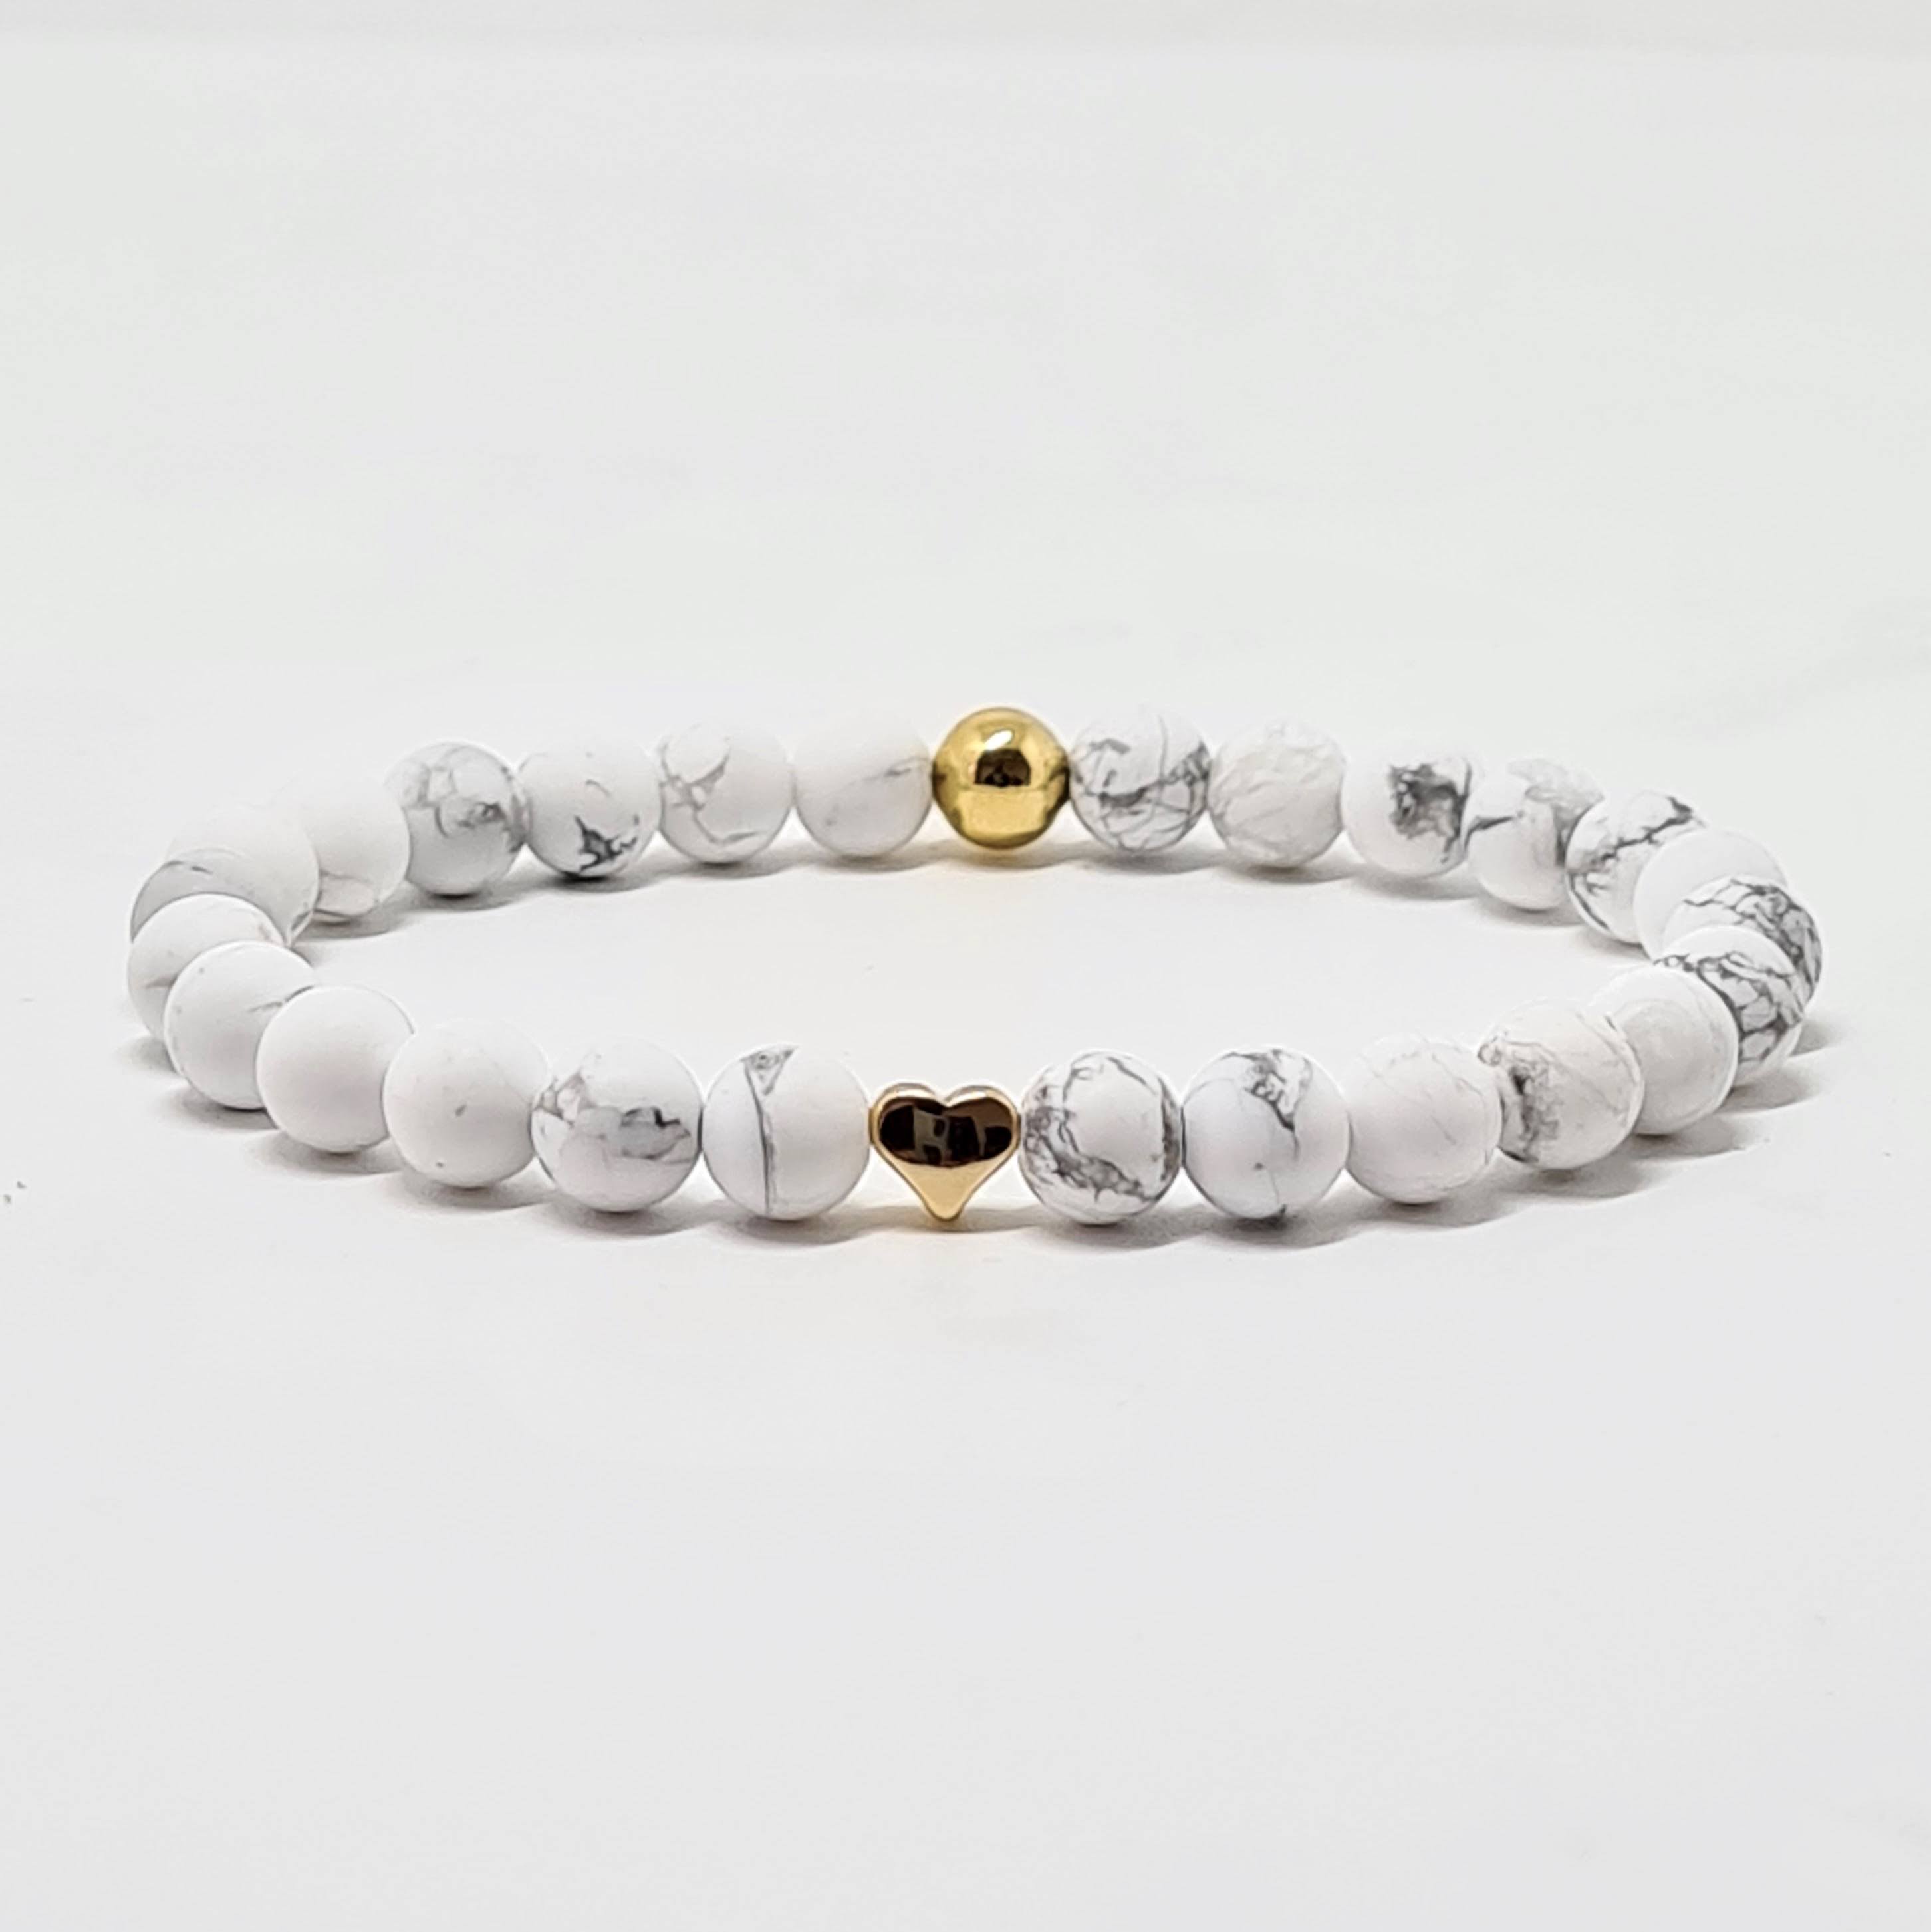 Howlite Energy Gemstone Bracelet with Gold Love Heart